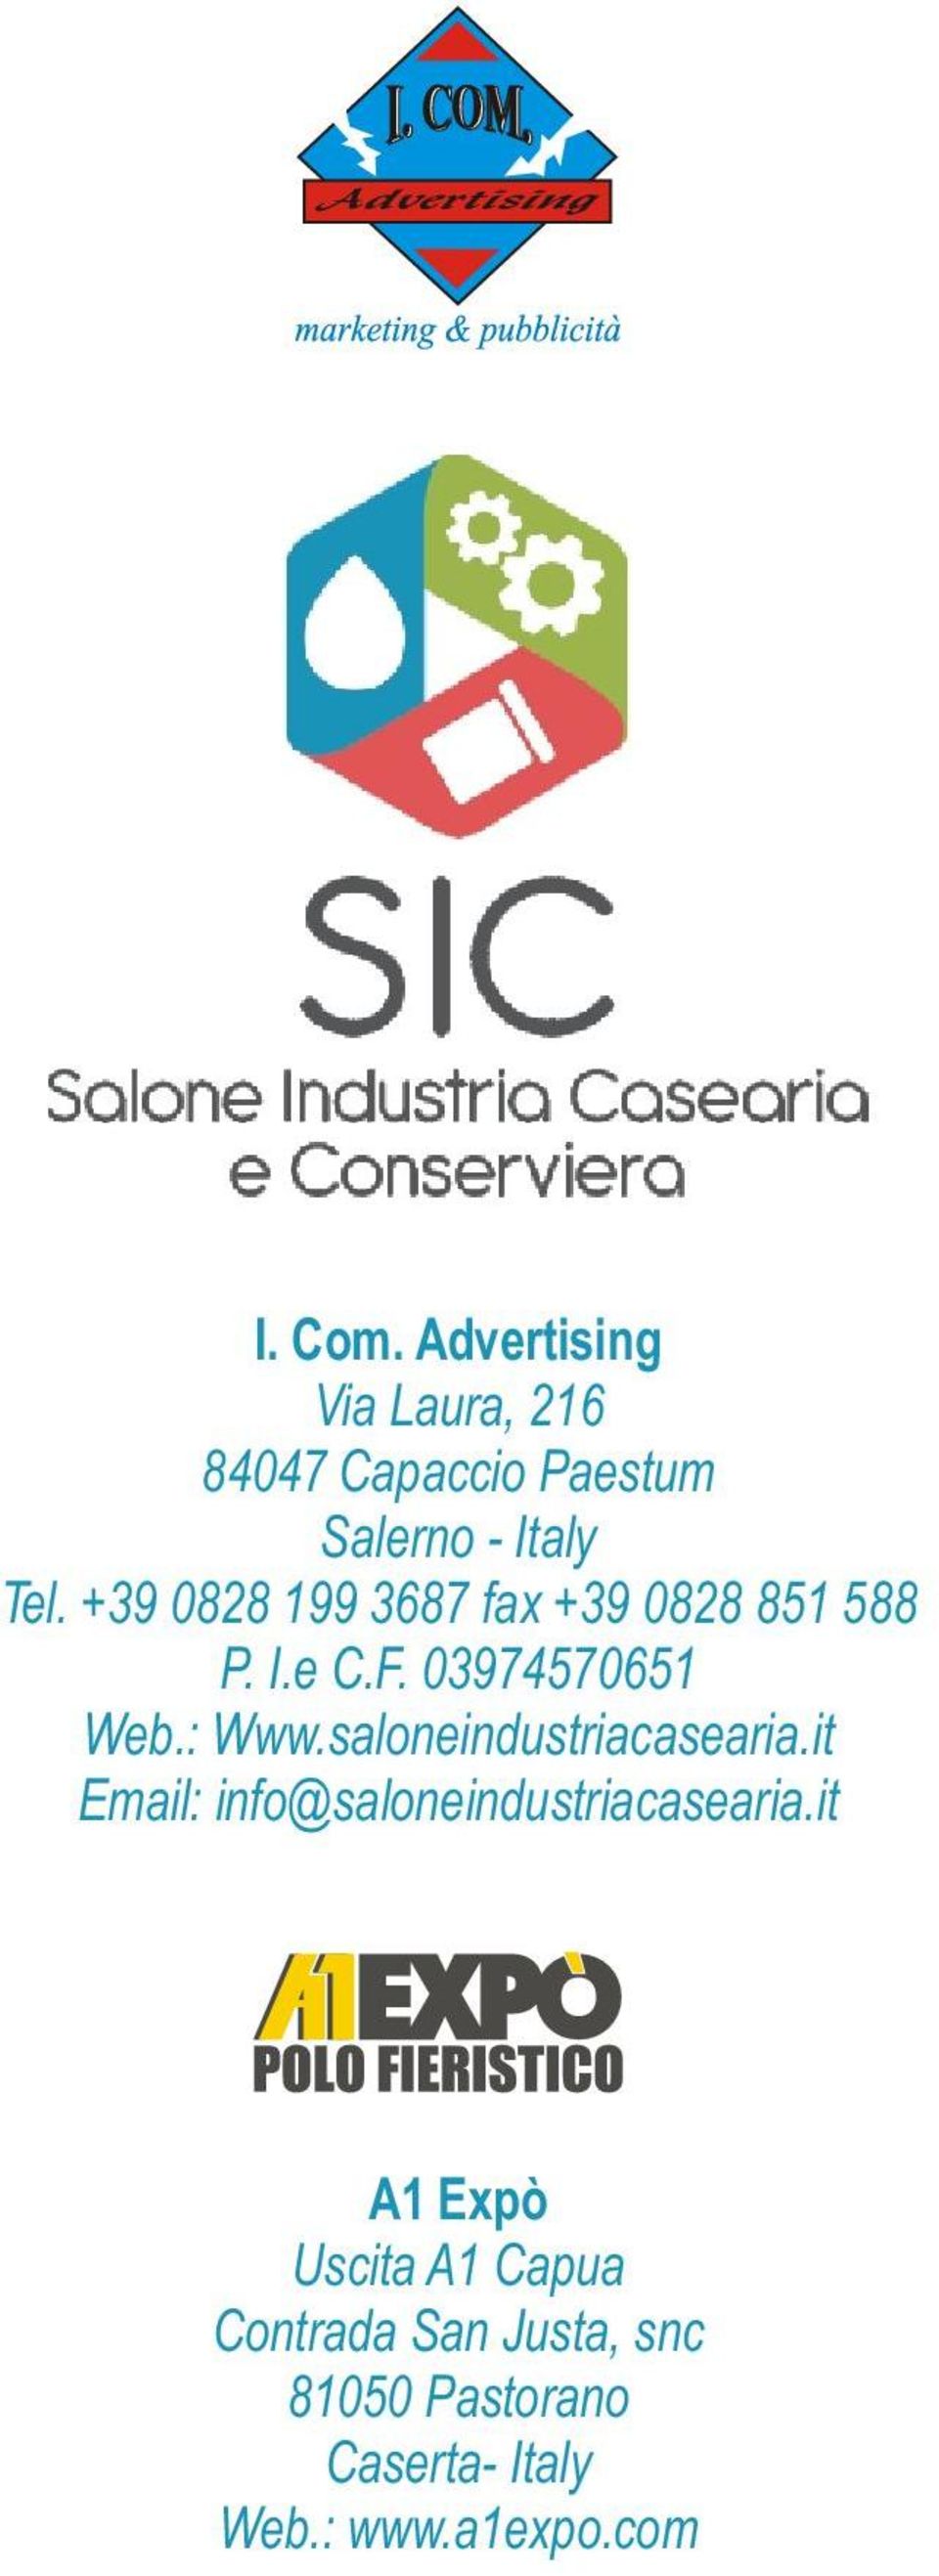 saloneindustriacasearia.it Email: info@saloneindustriacasearia.